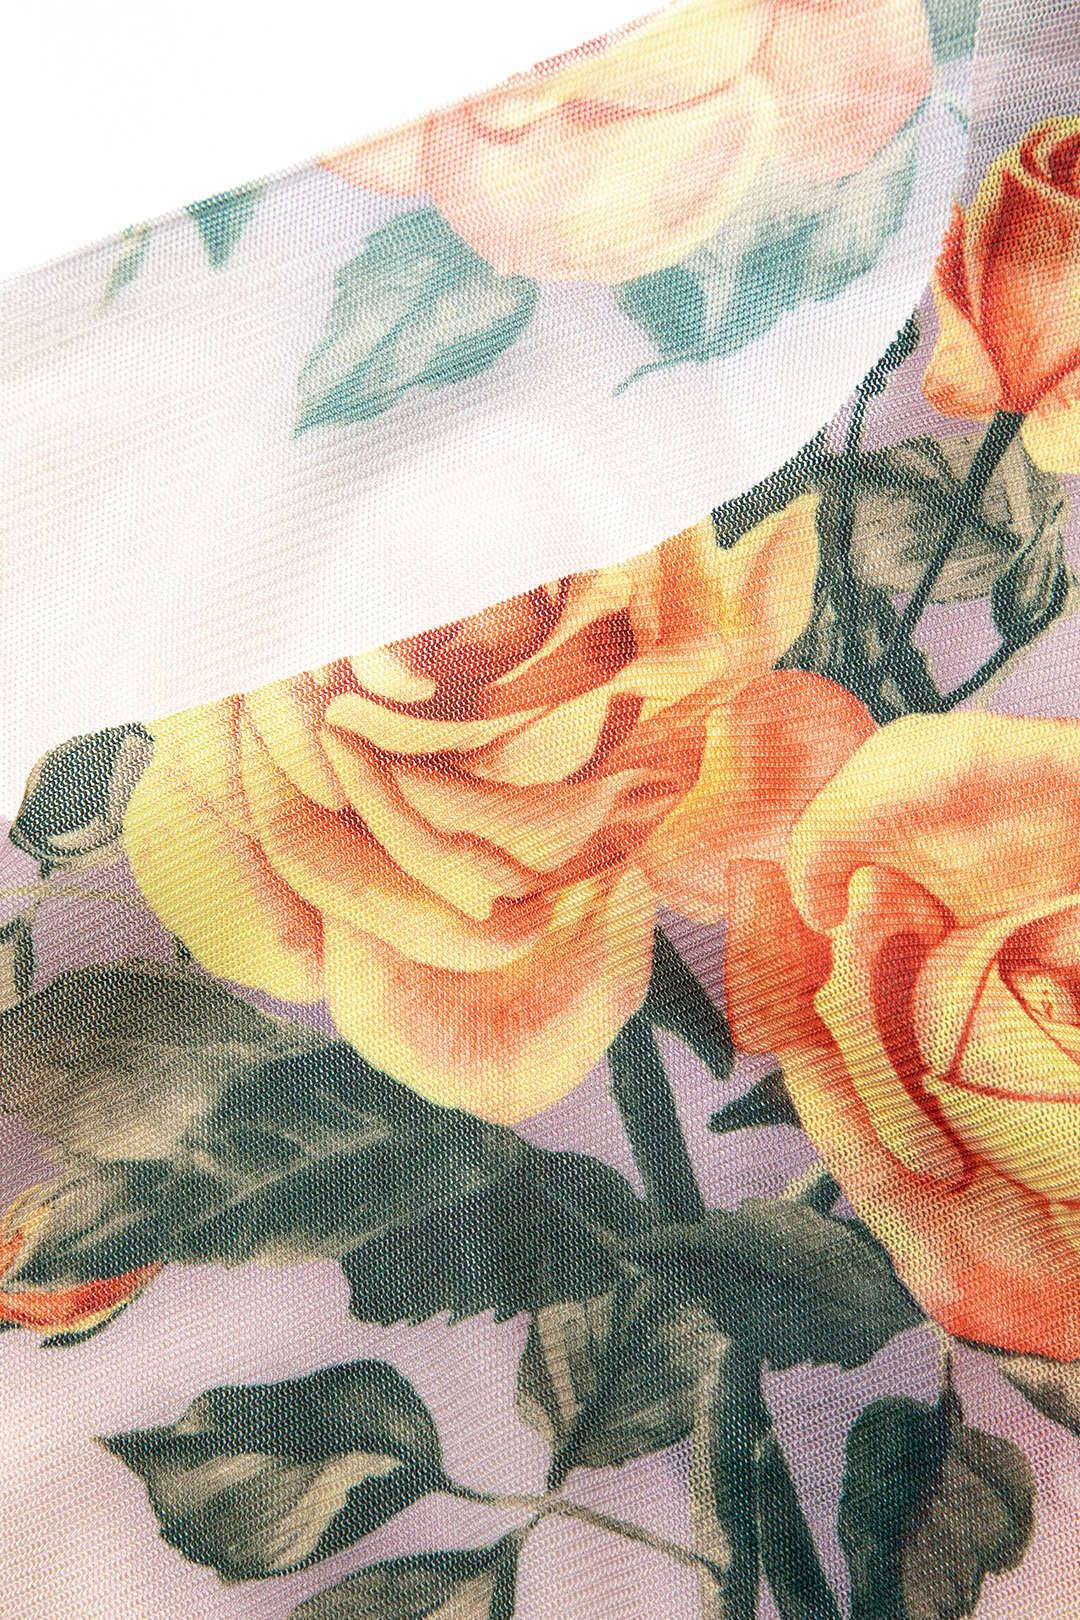 Floral Print Mesh Long Sleeve Maxi Dress